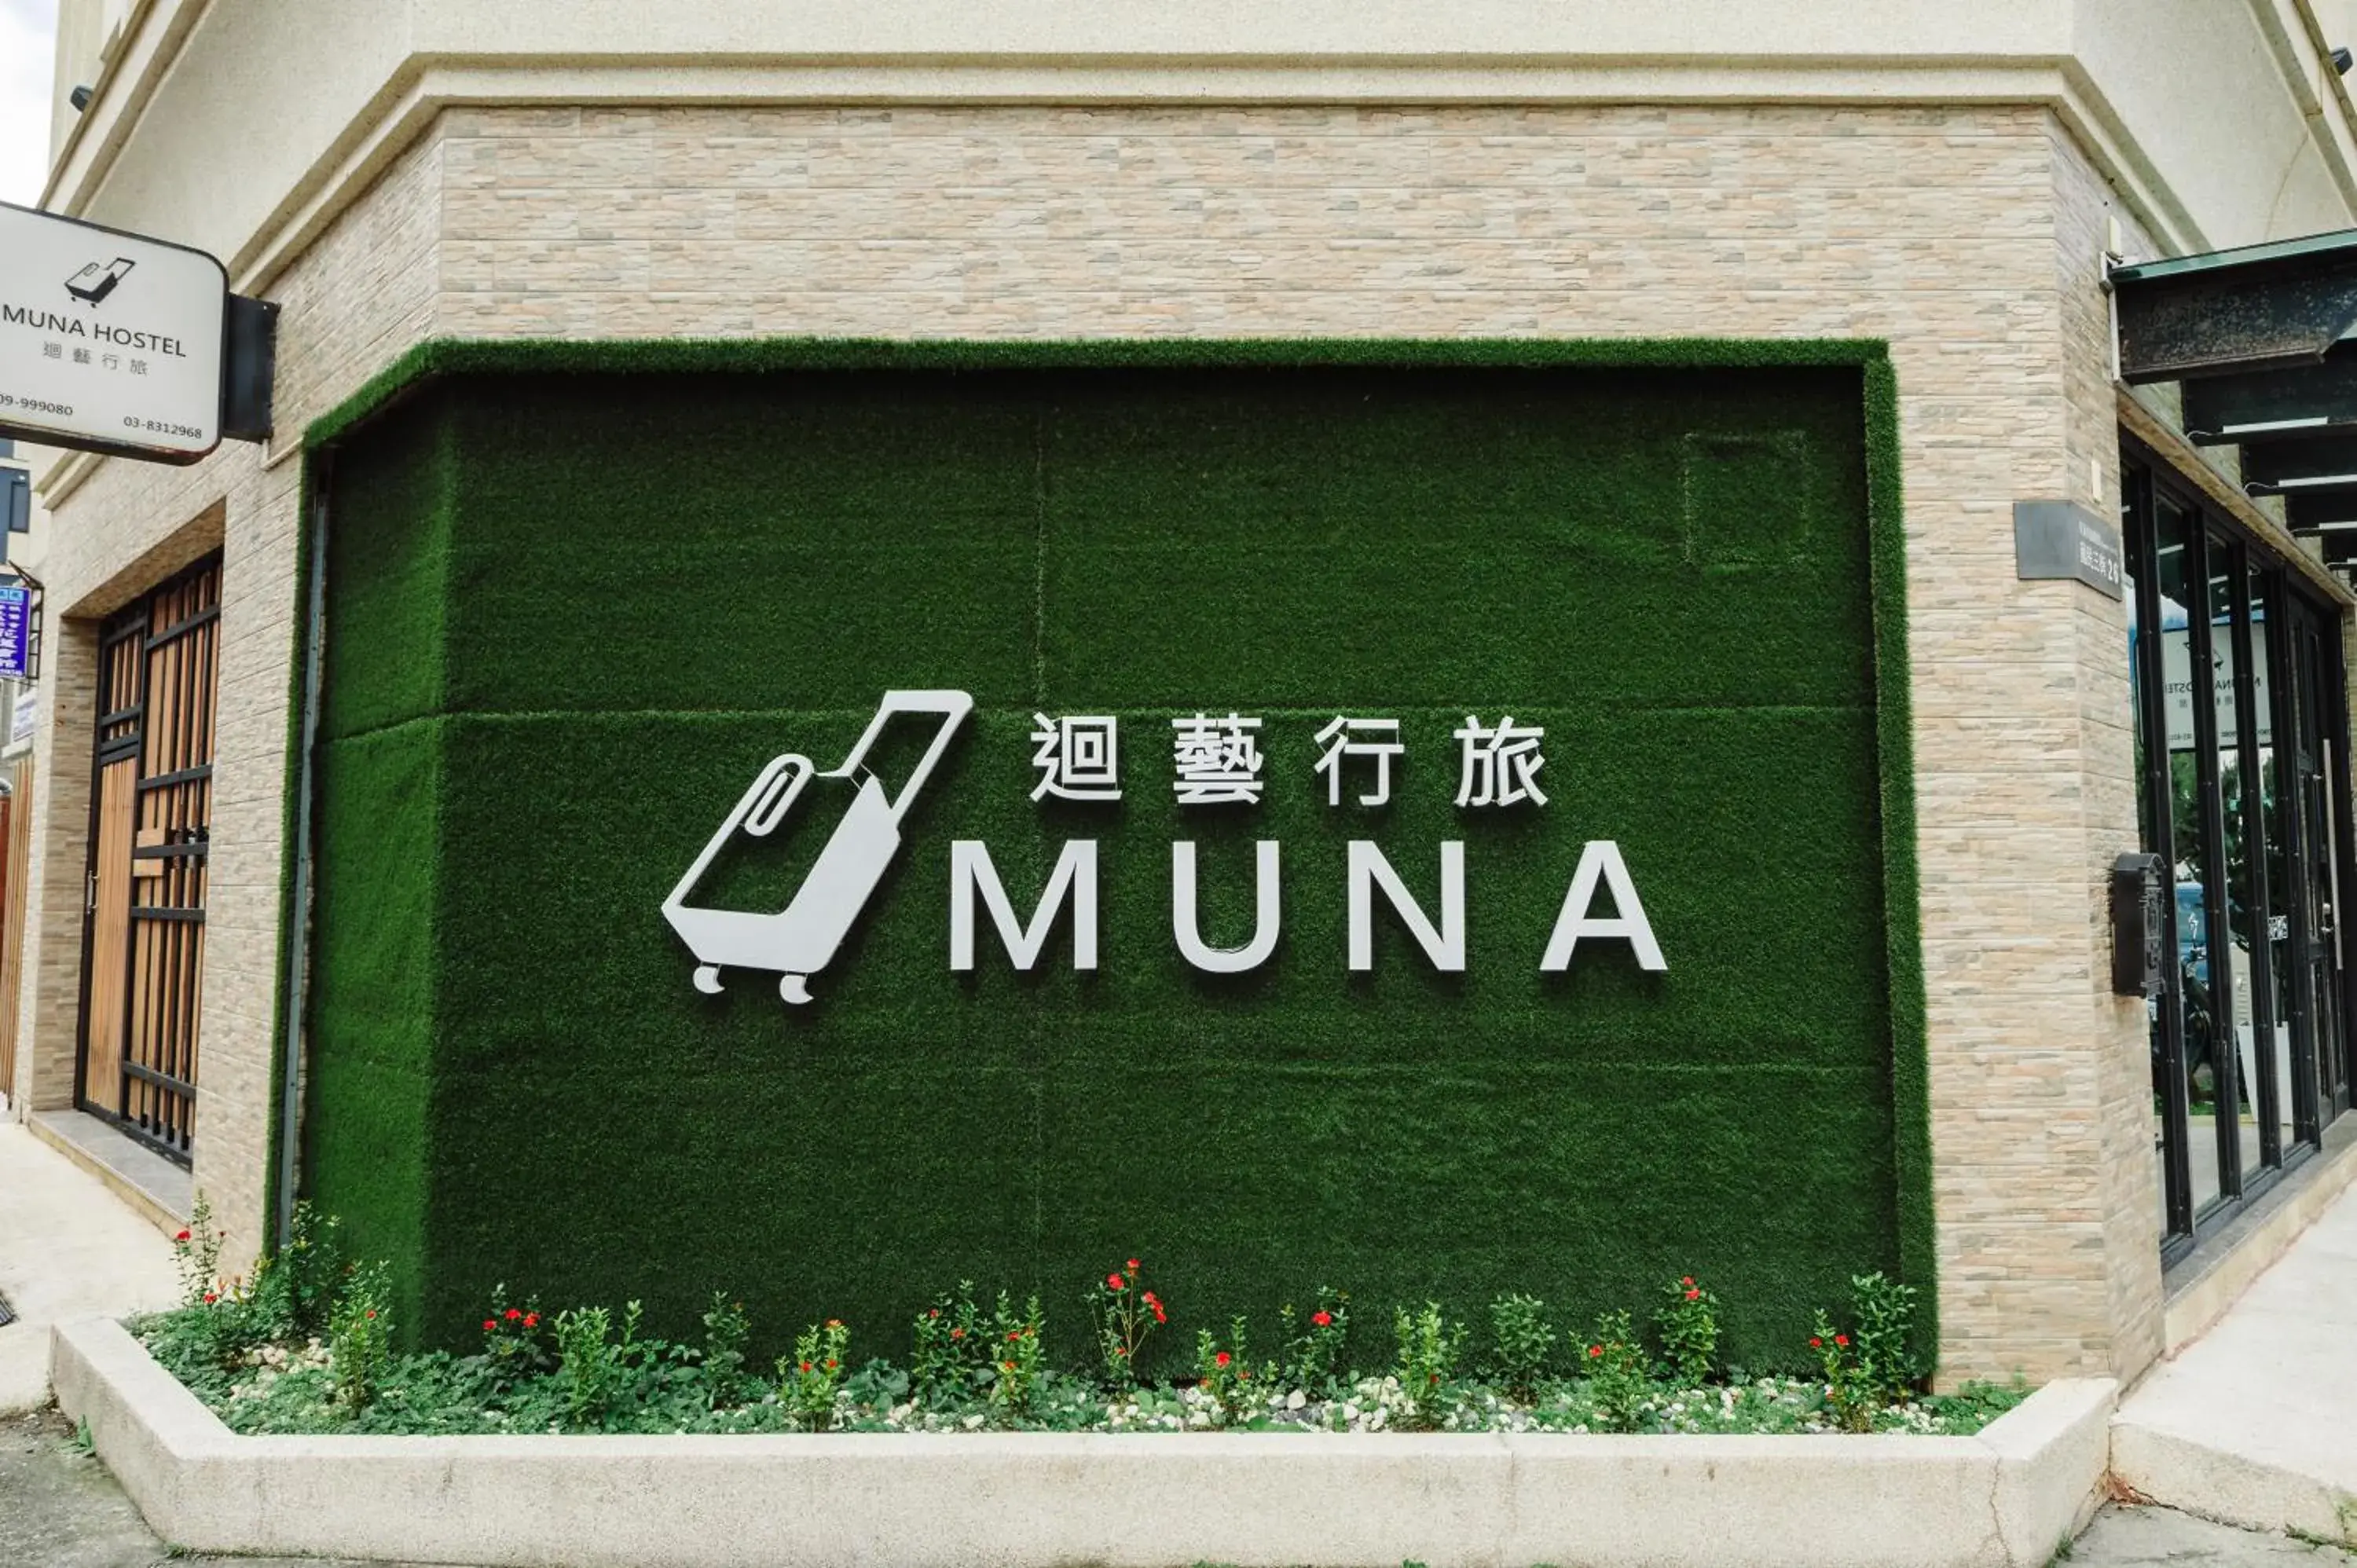 Property building in Muna Hostel